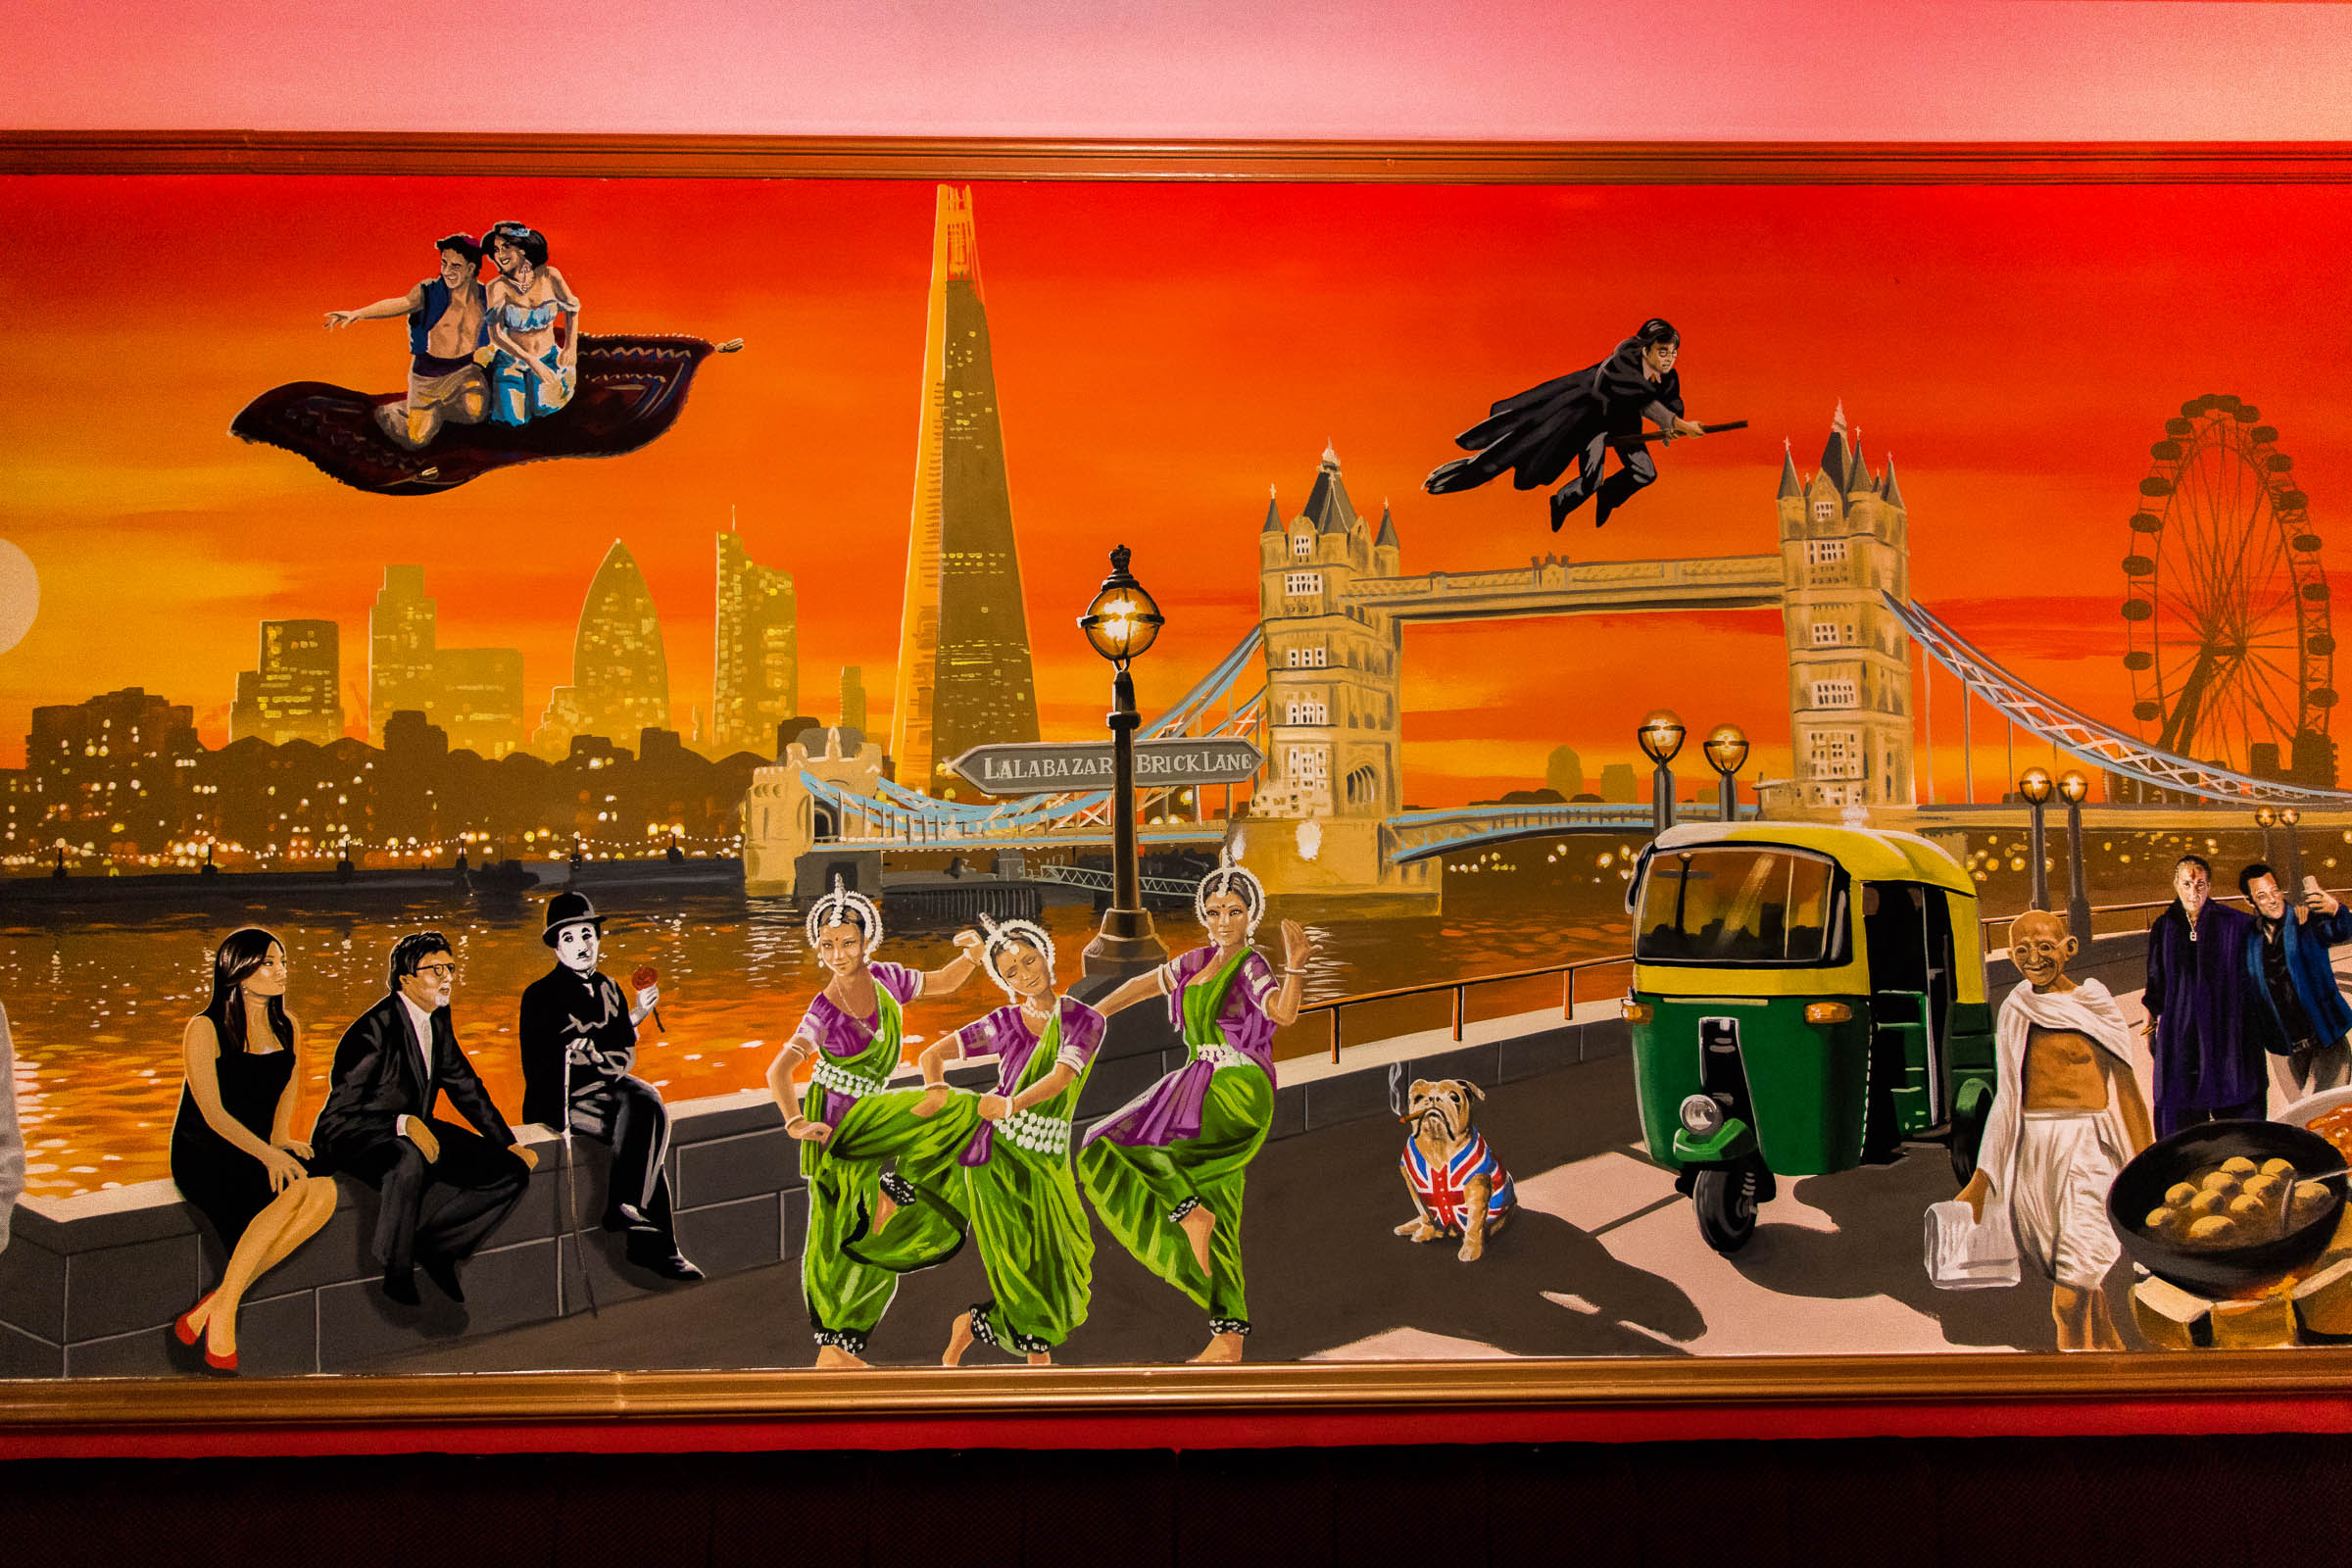 Aladin Mural Restaurant in Brick Lane - The Shard and Tower Bridge, more Characters, dancers, an Auto-Rickshaw, British bulldog, Ghandi and Harry Potter